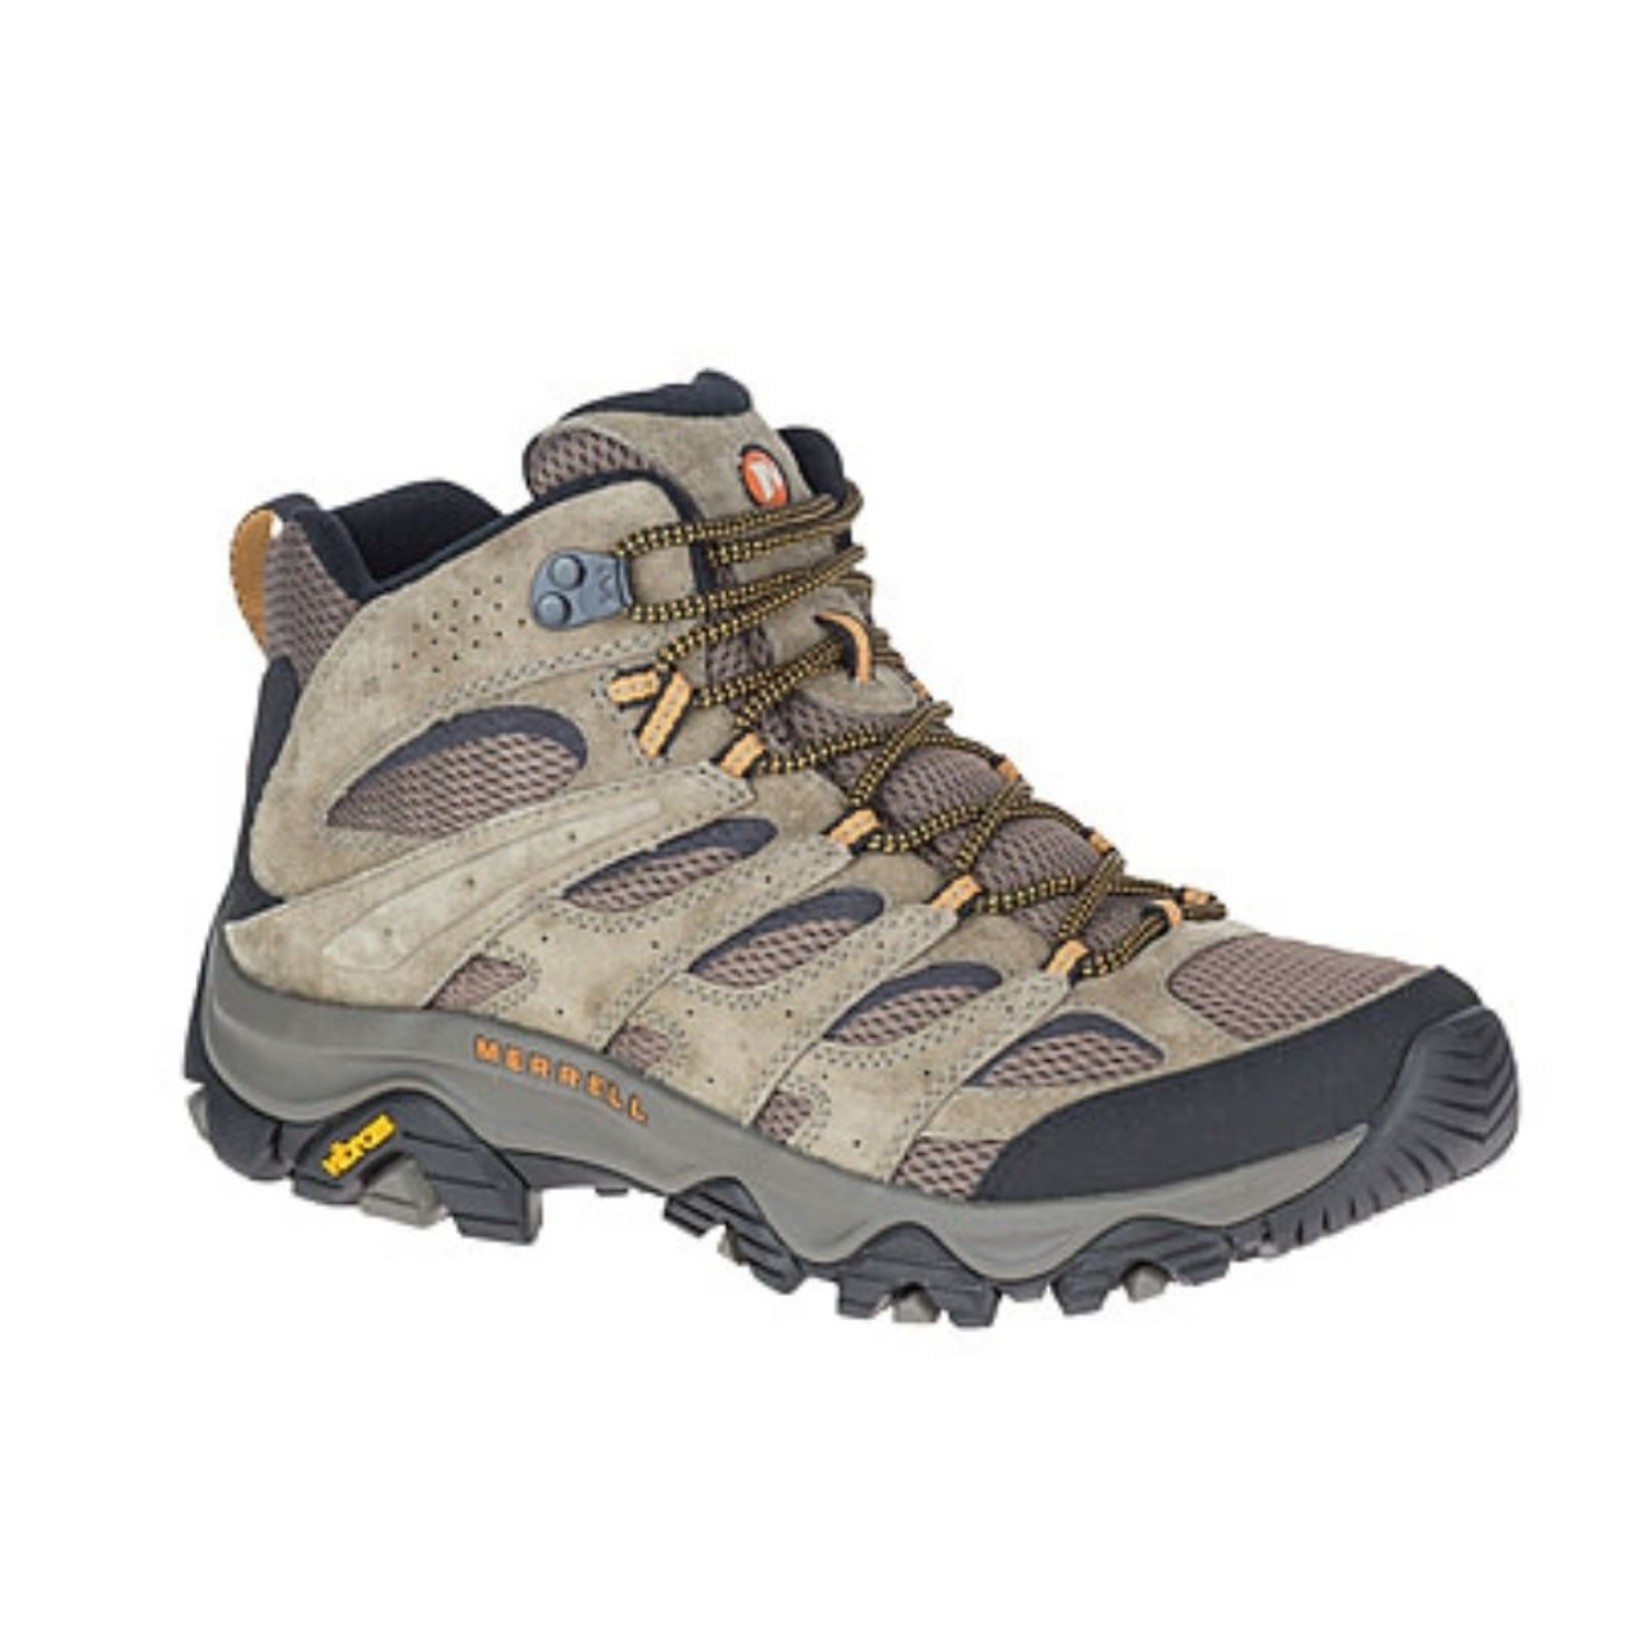 Merrell Moab 3 Mid Men's Hiking Boots - Shippy